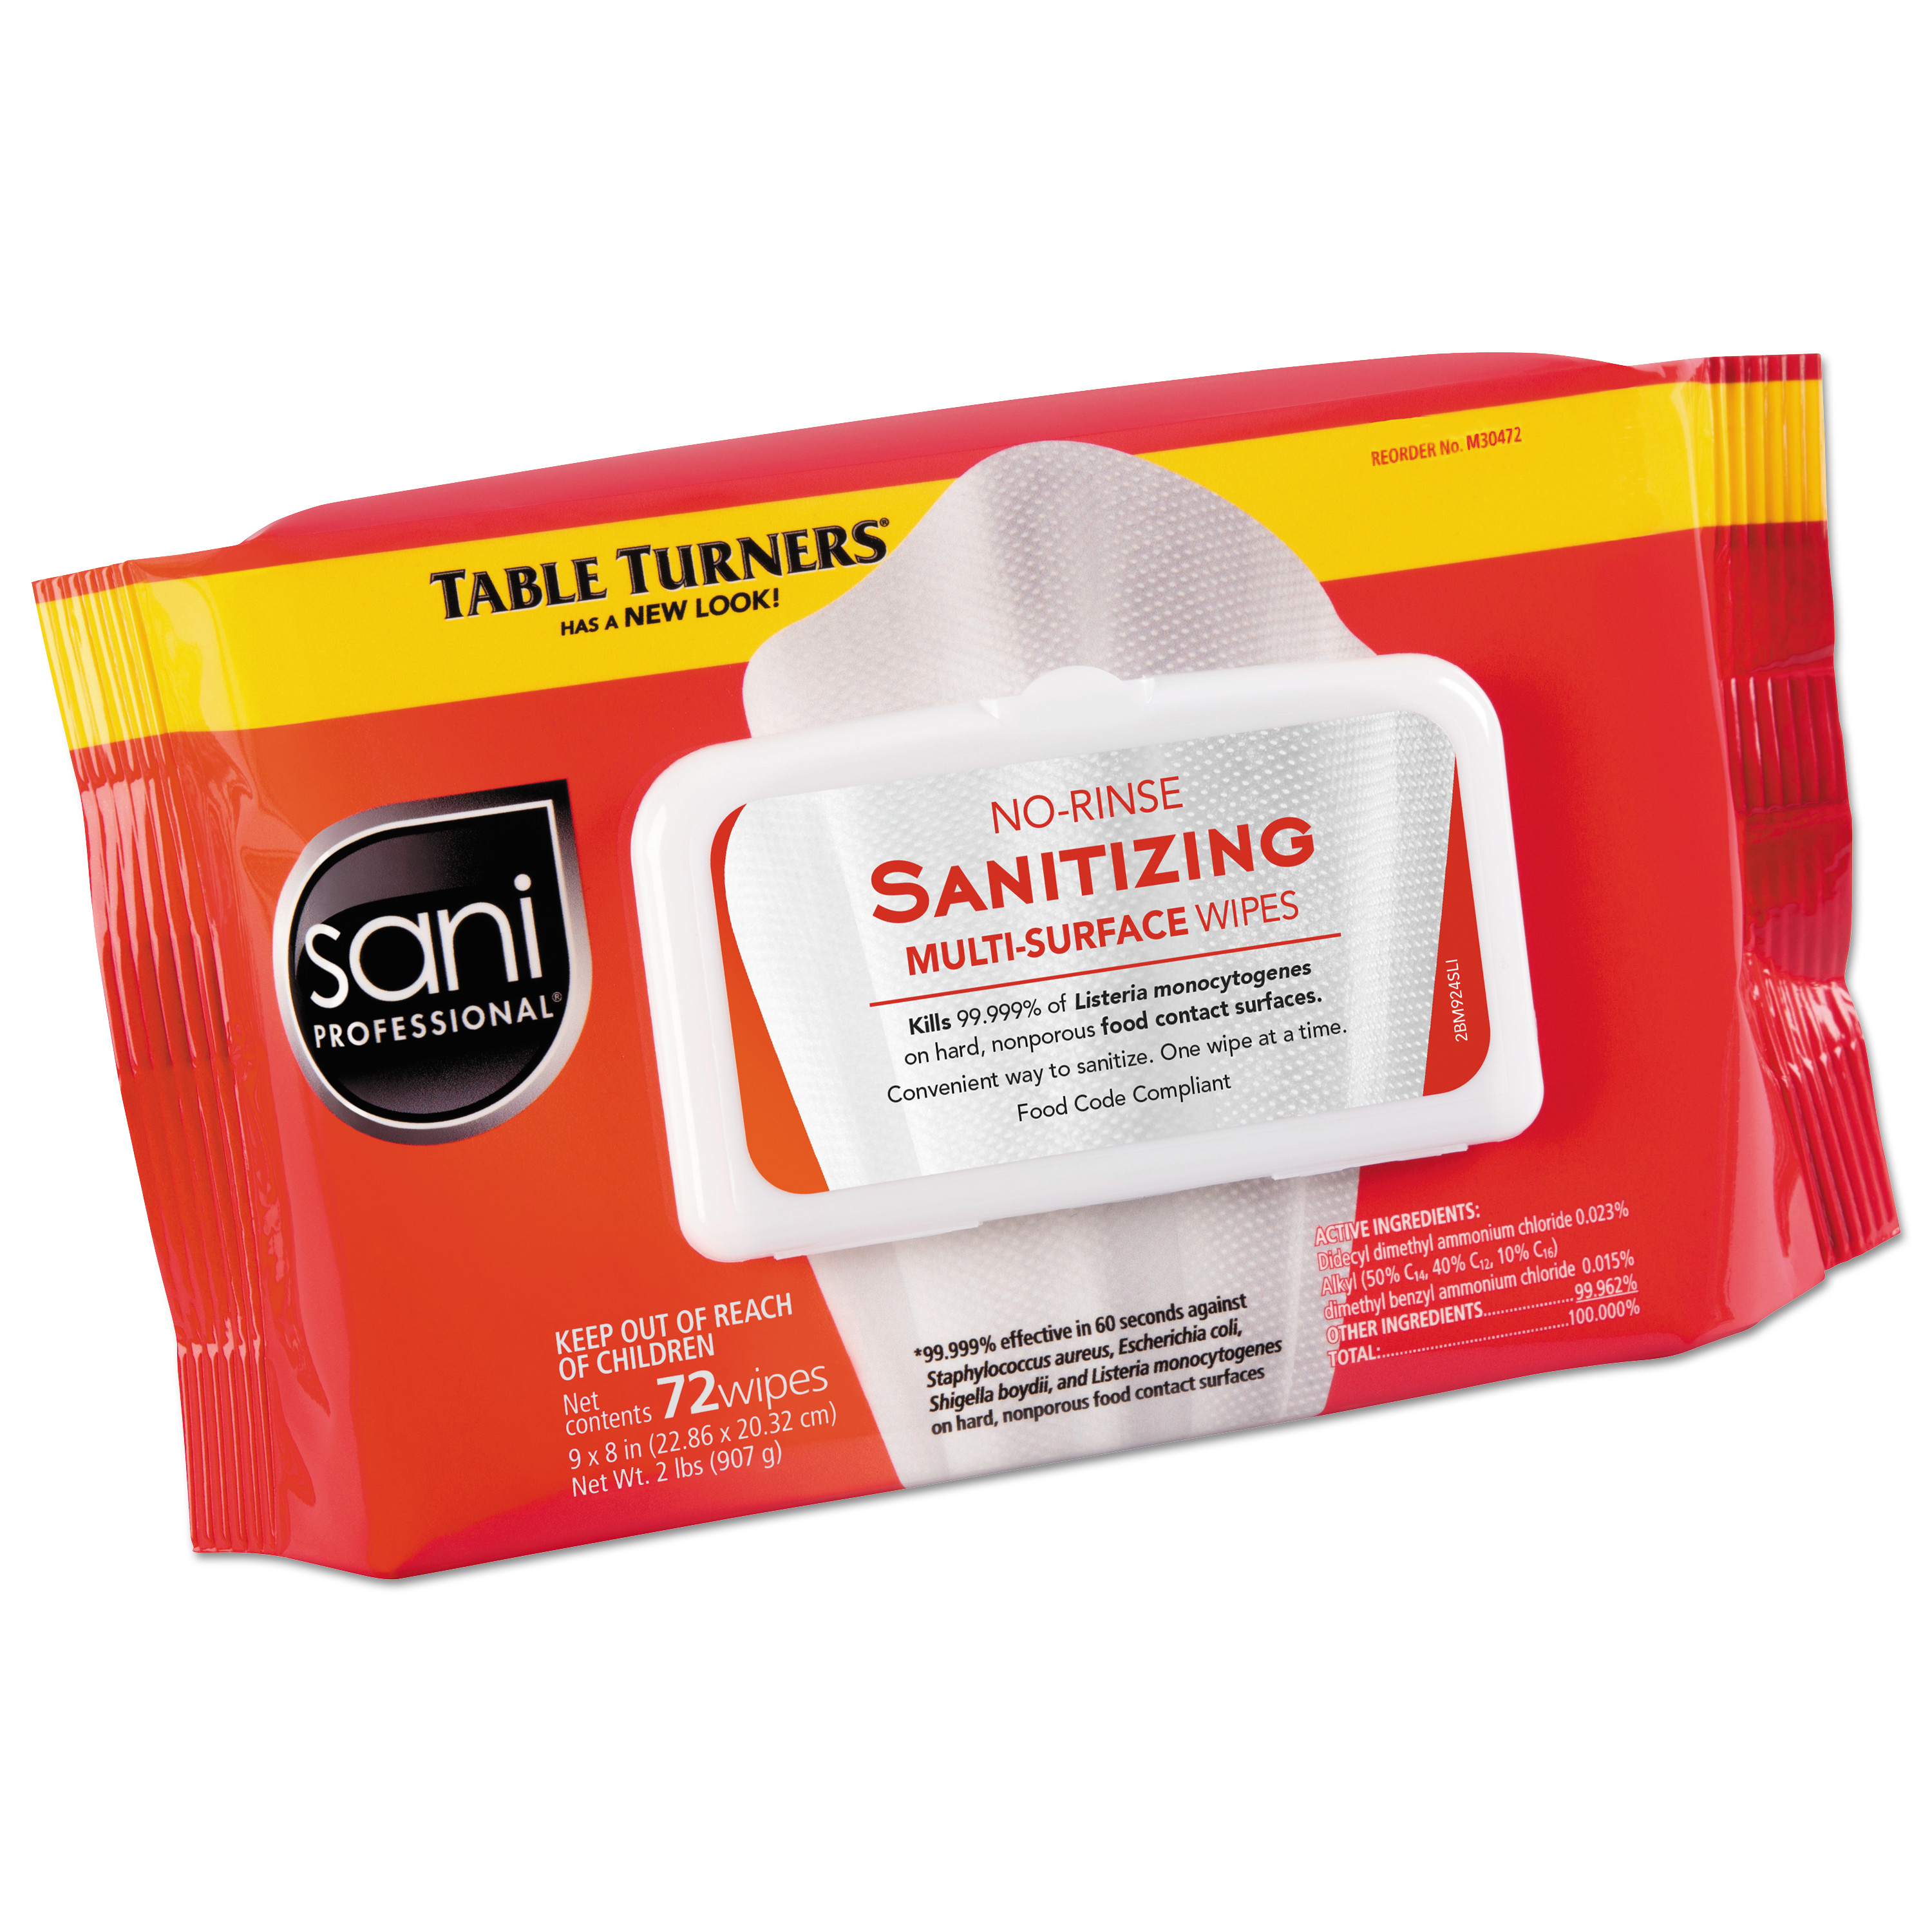 No-Rinse Sanitizing Multi-Surface Wipes, 9